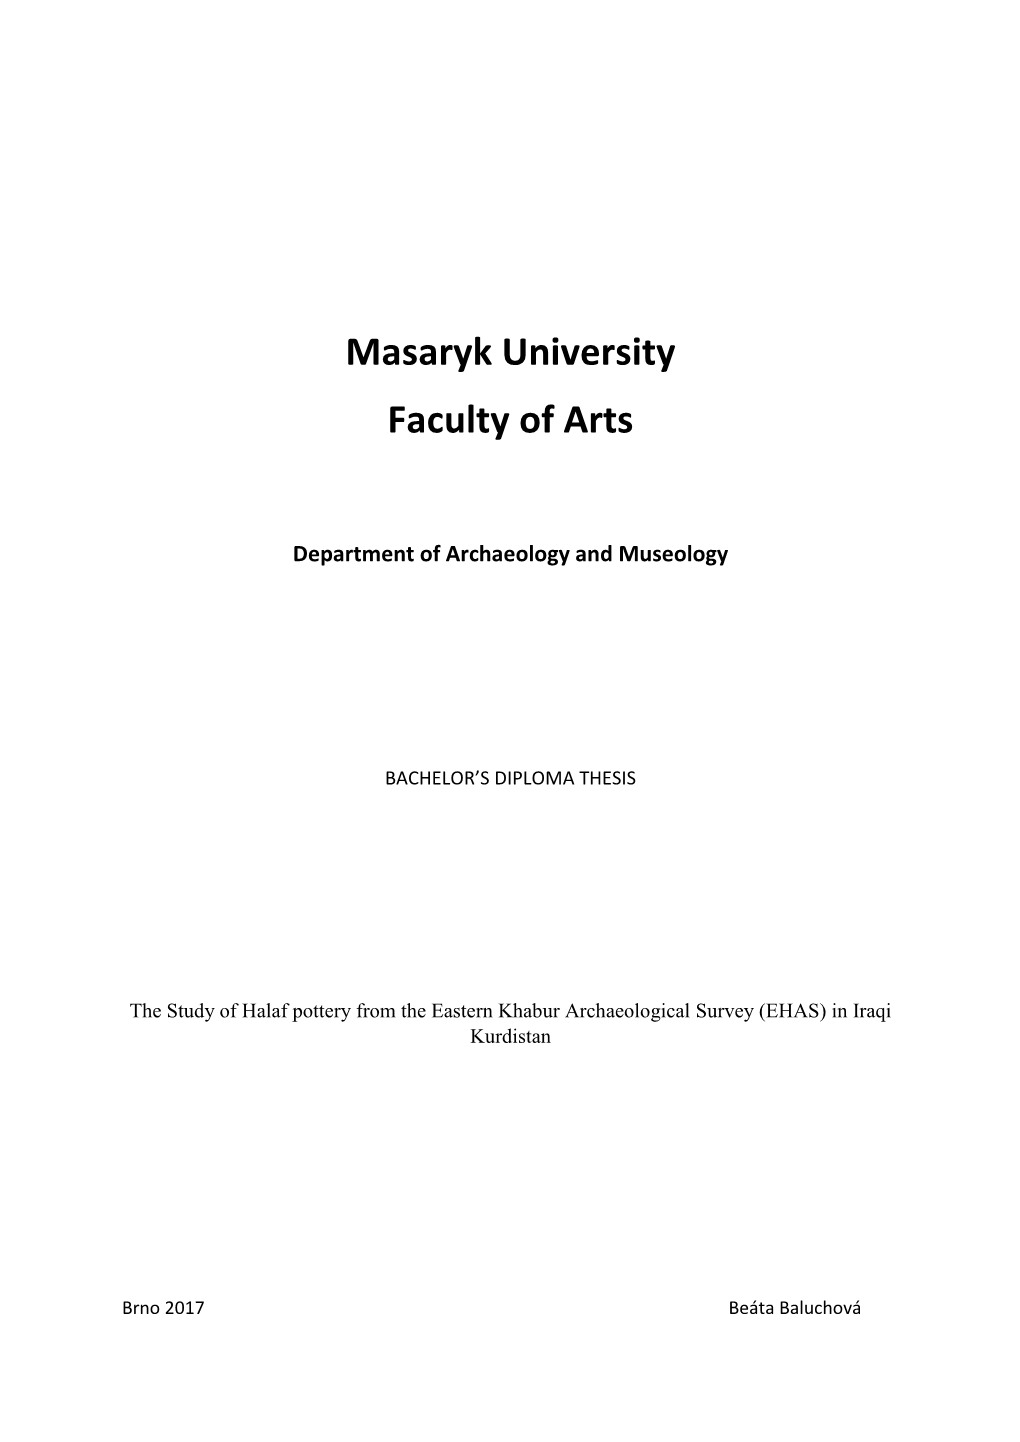 Masaryk University Faculty of Arts